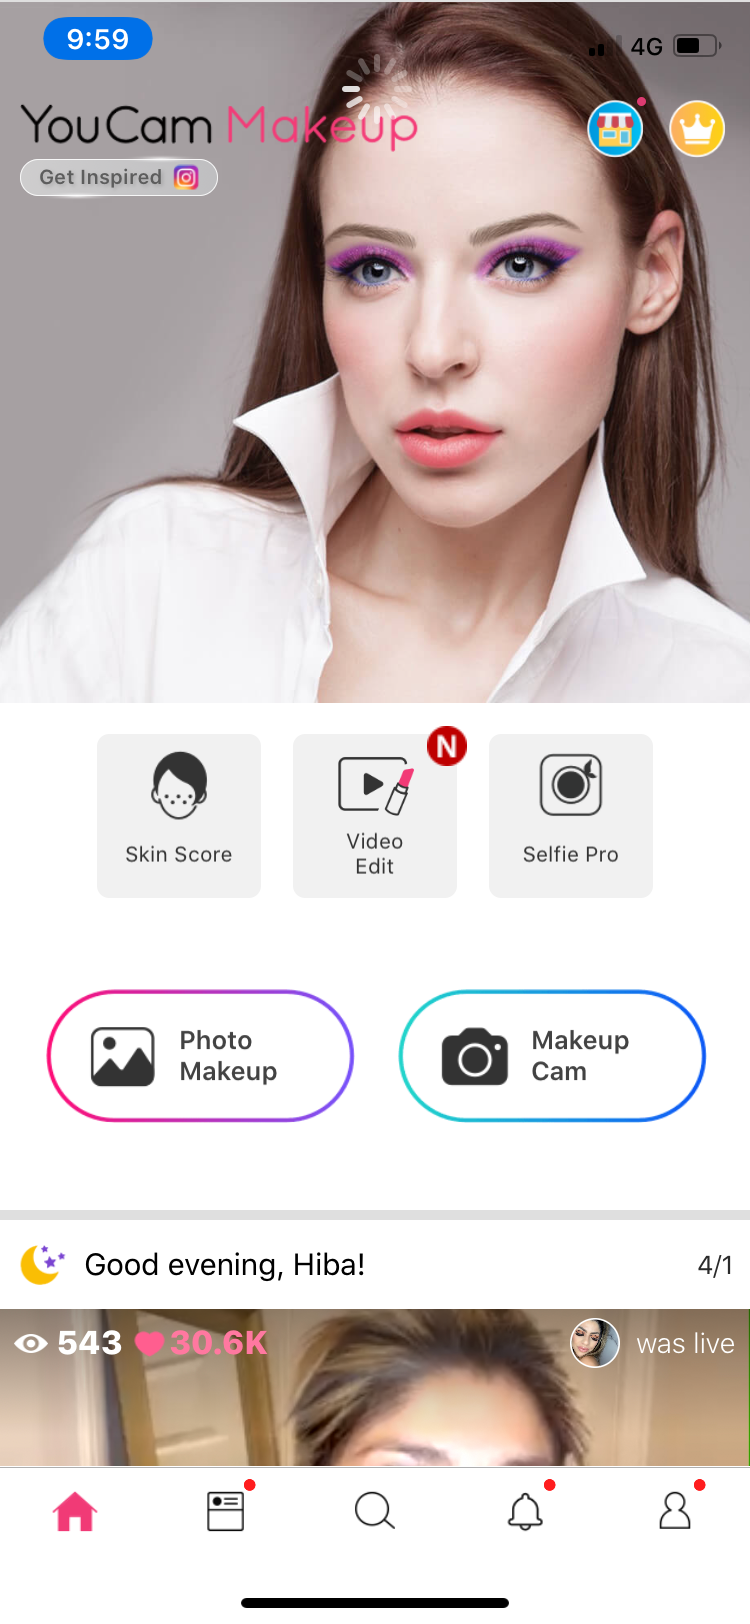 YouCam makeup homepage